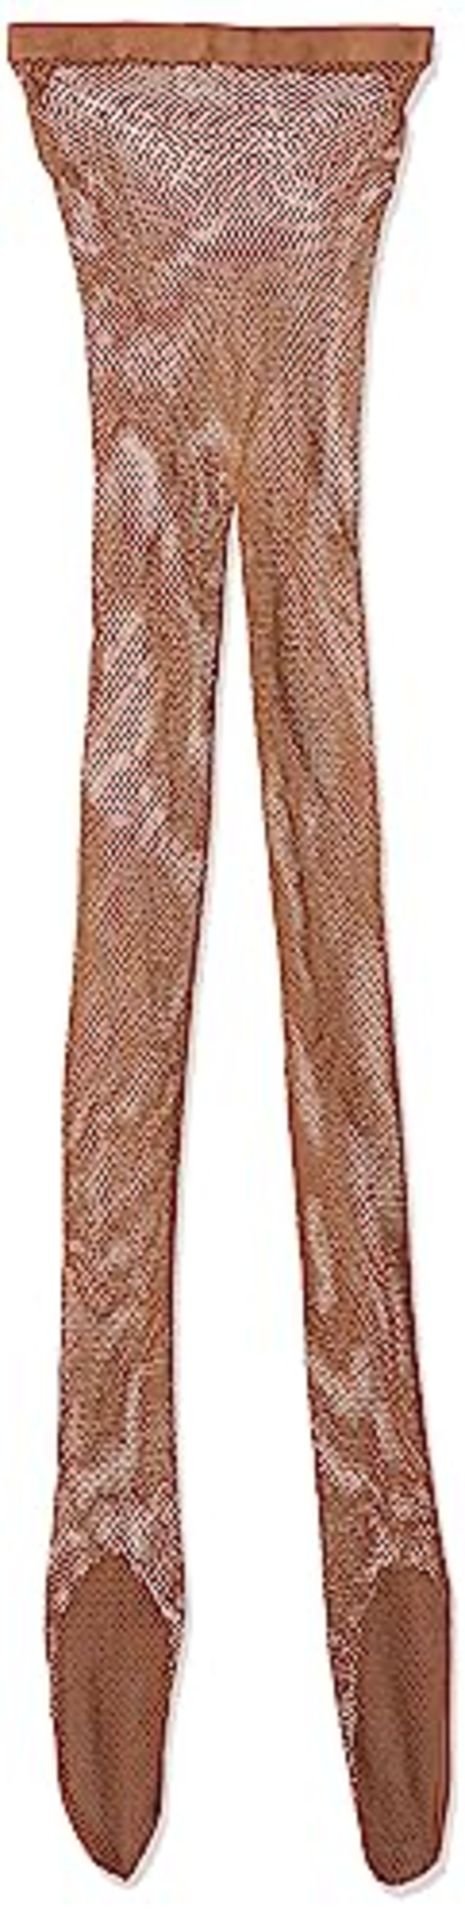 Capezio Women's Professional Fishnet Seamless Tight Stockings, Suntan, Medium/High